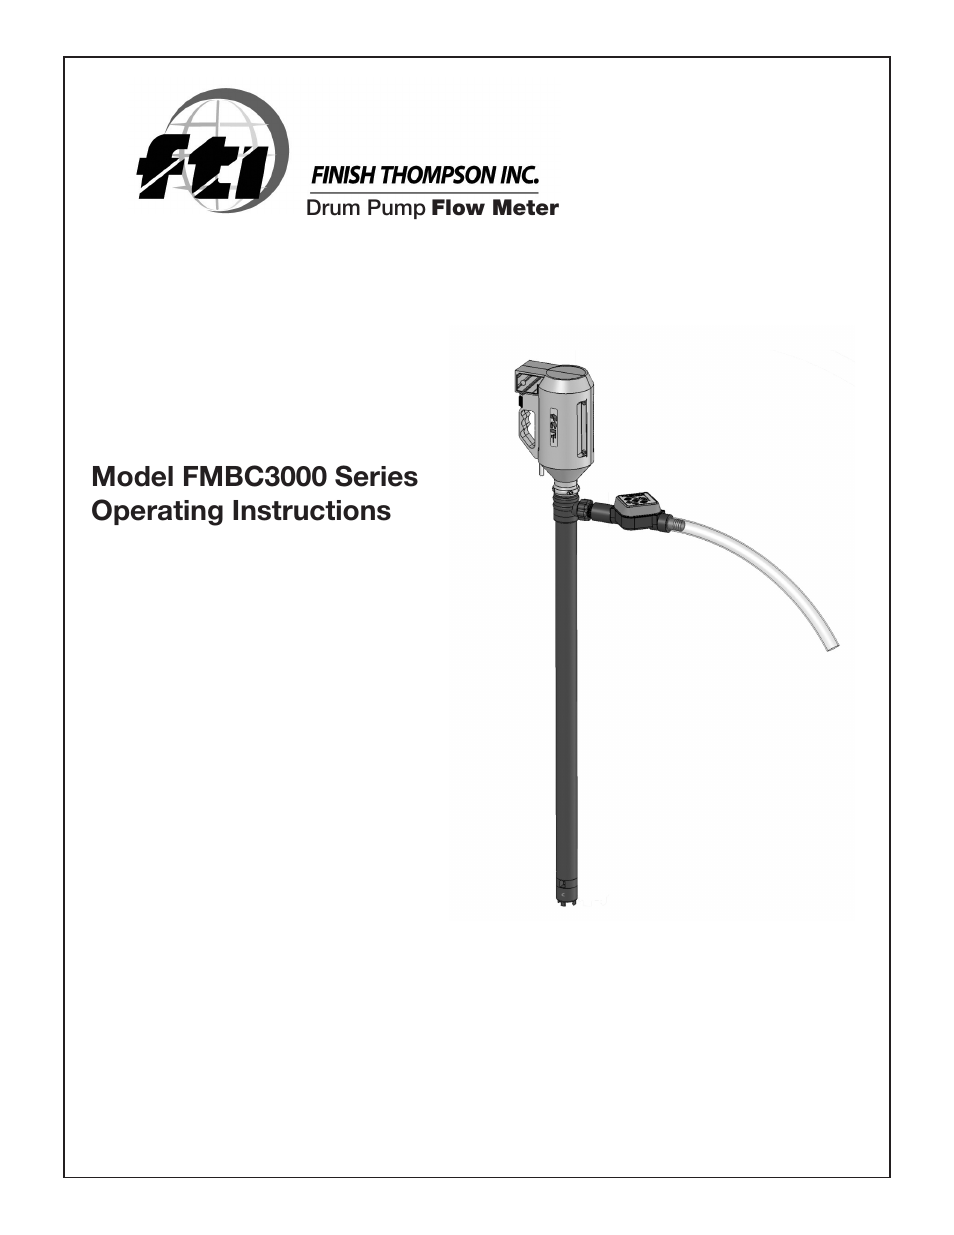 FMBC3000 Series